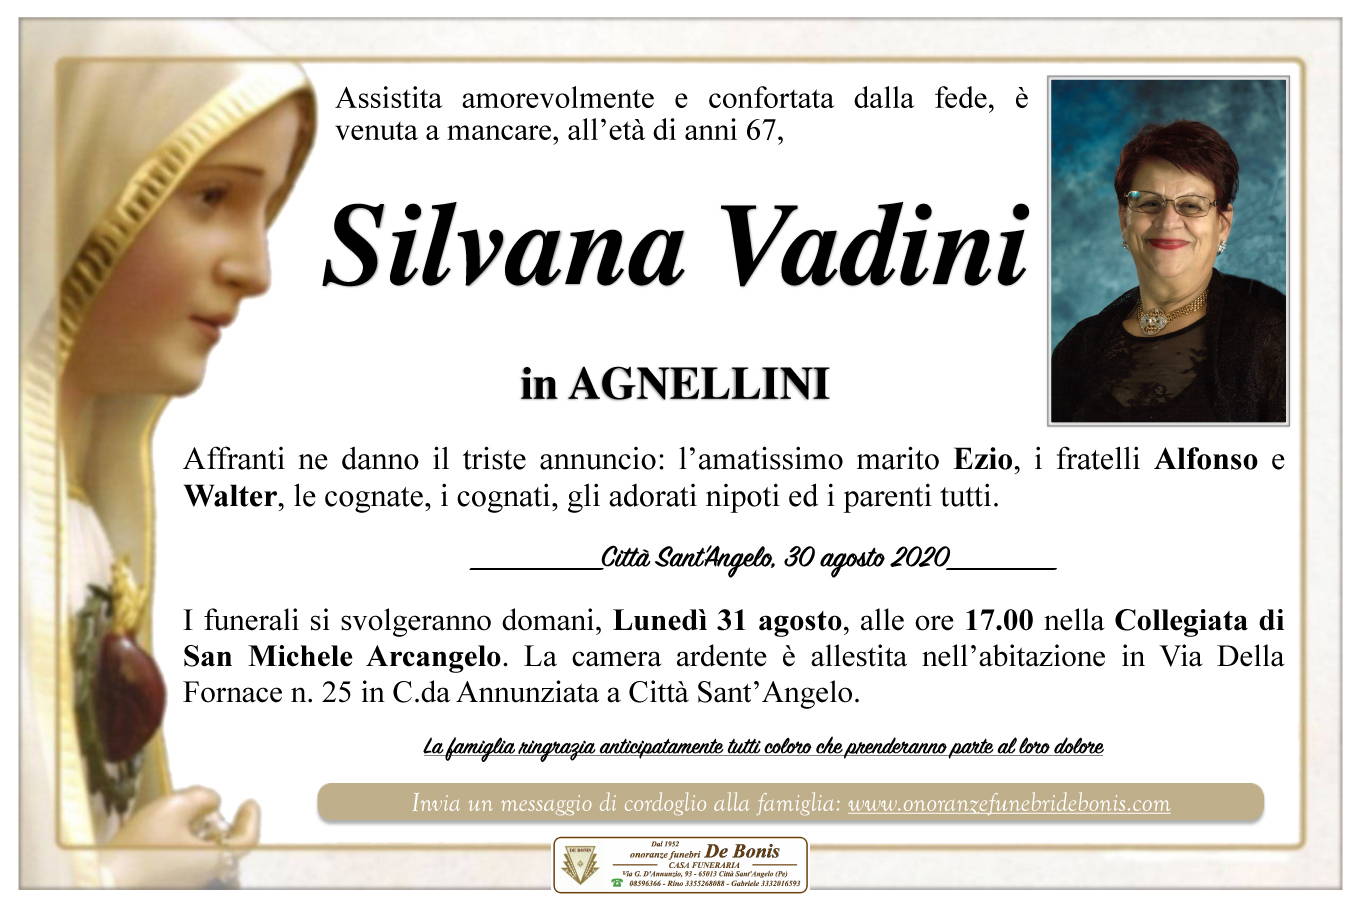 Silvana Vadini